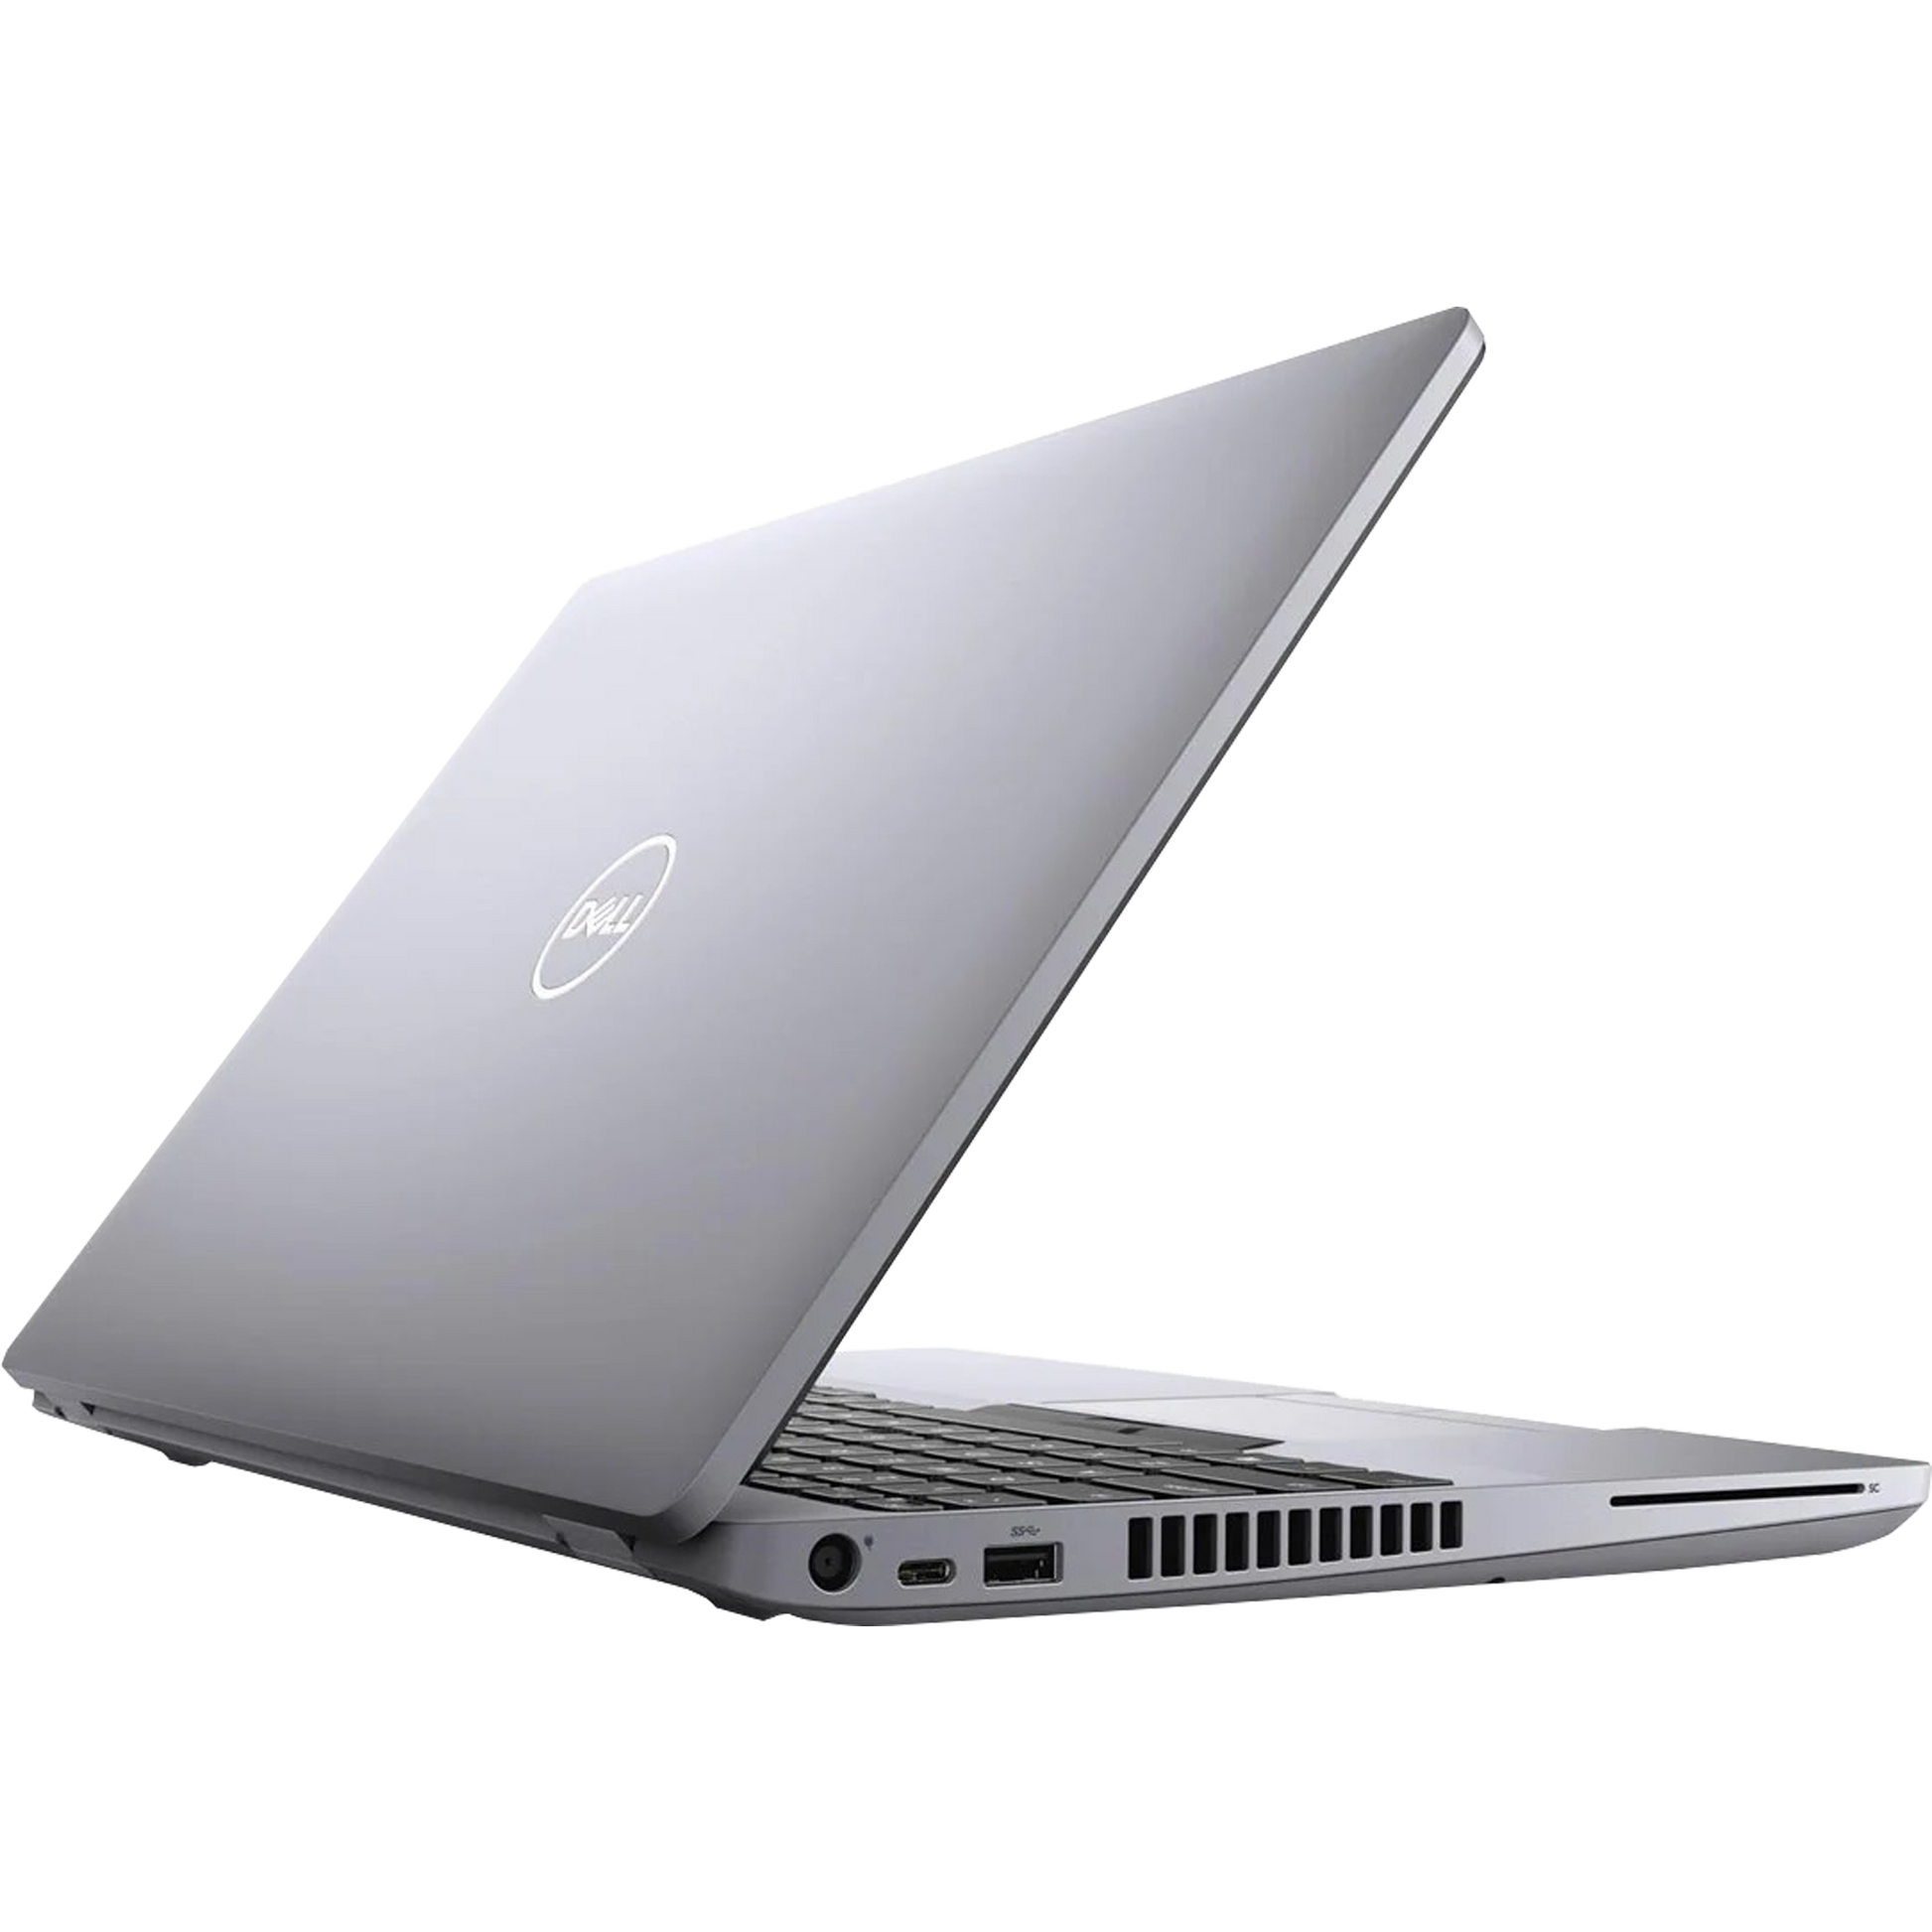 Dell Latitude 5511 Intel i7, 10th Gen Laptop with 16GB Ram + Win 11 Laptops - Refurbished